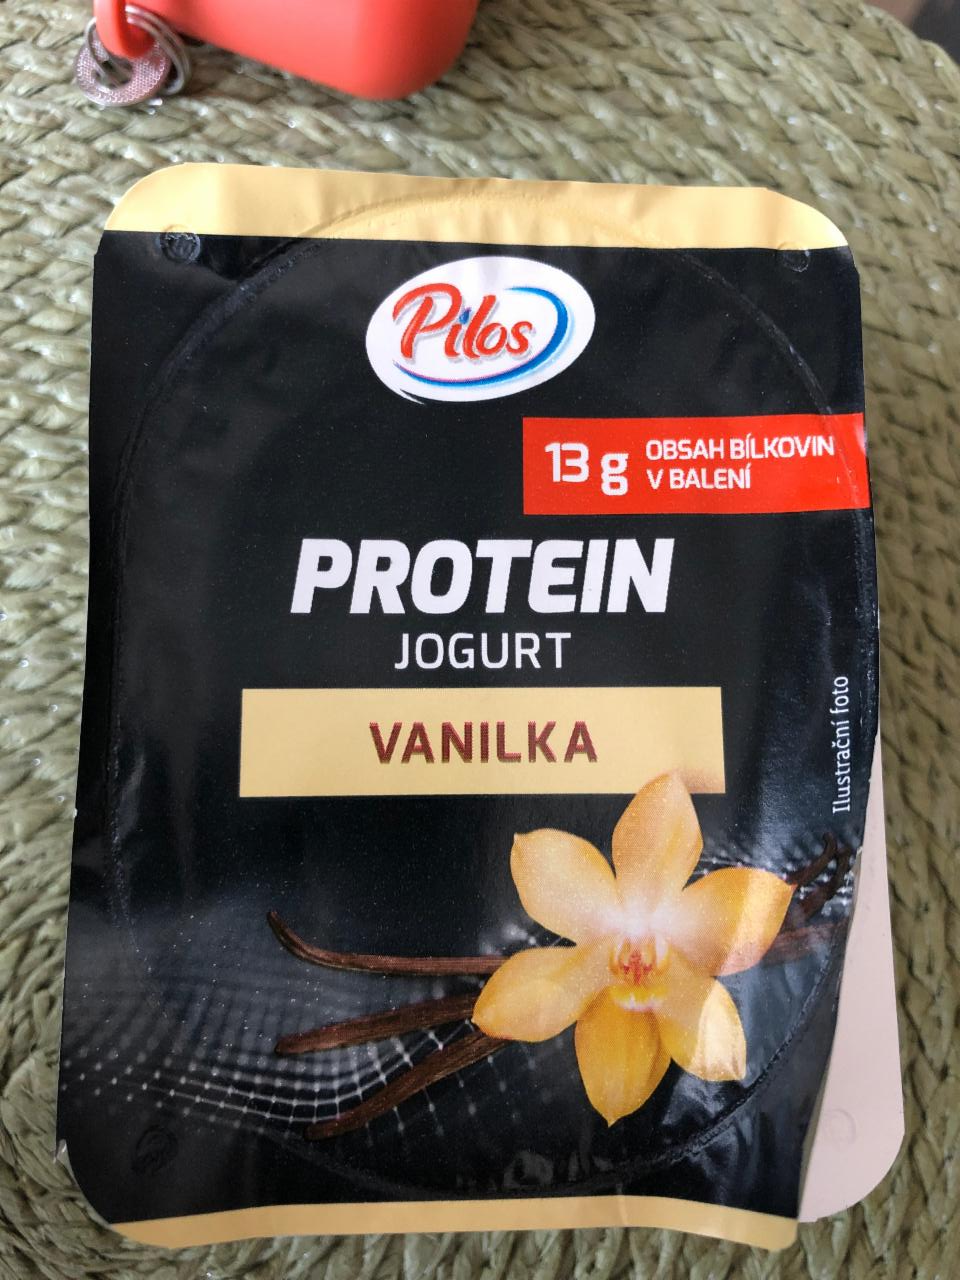 Képek - Protein joghurt Vanilka Pilos